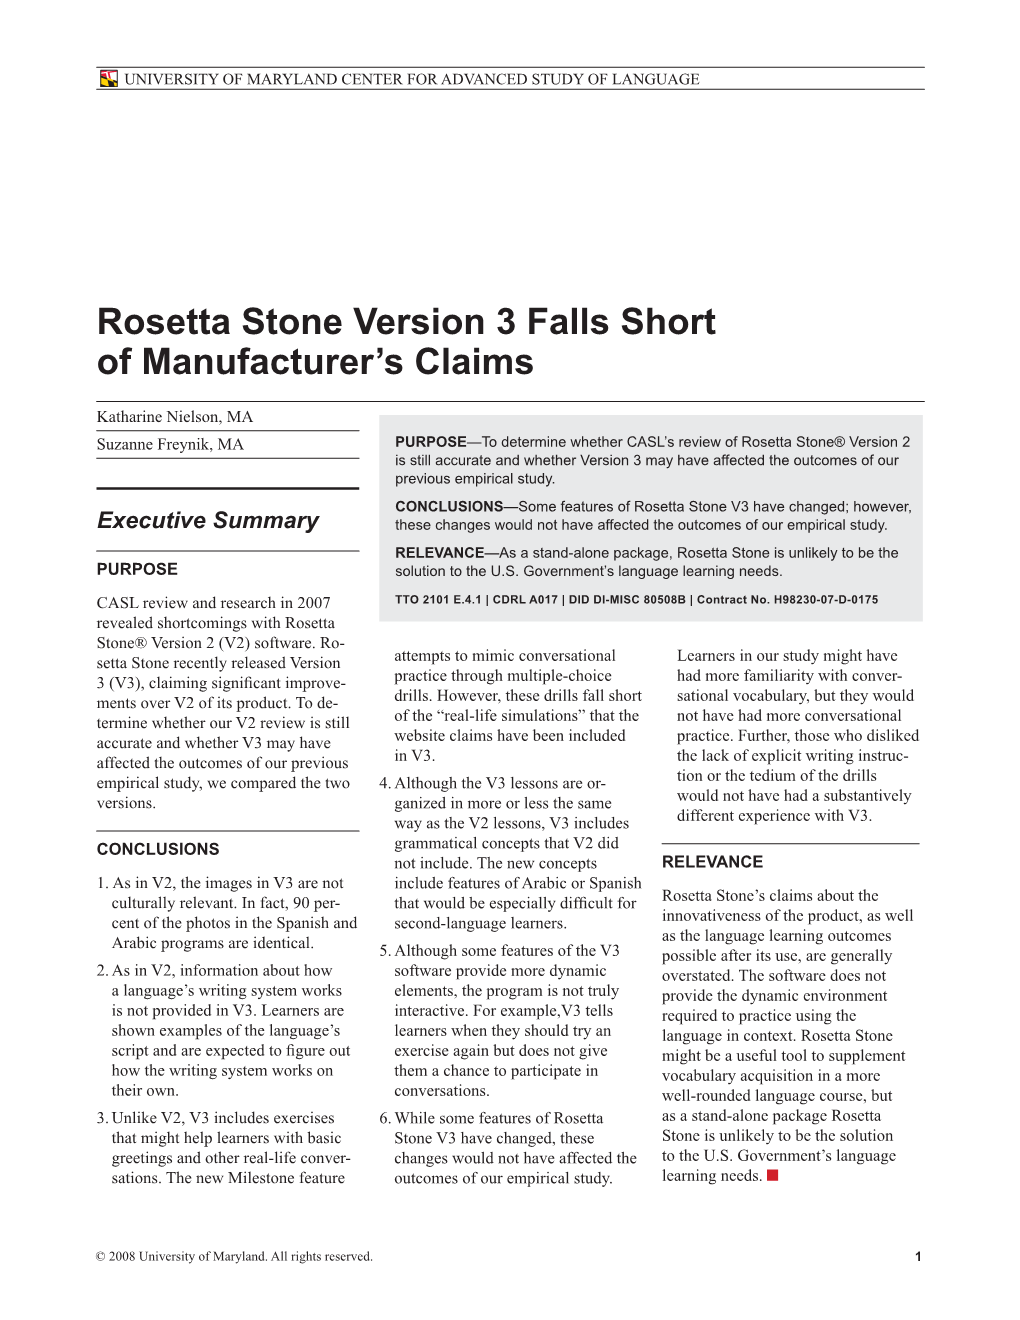 Rosetta Stone Version 3 Falls Short of Manufacturer's Claims